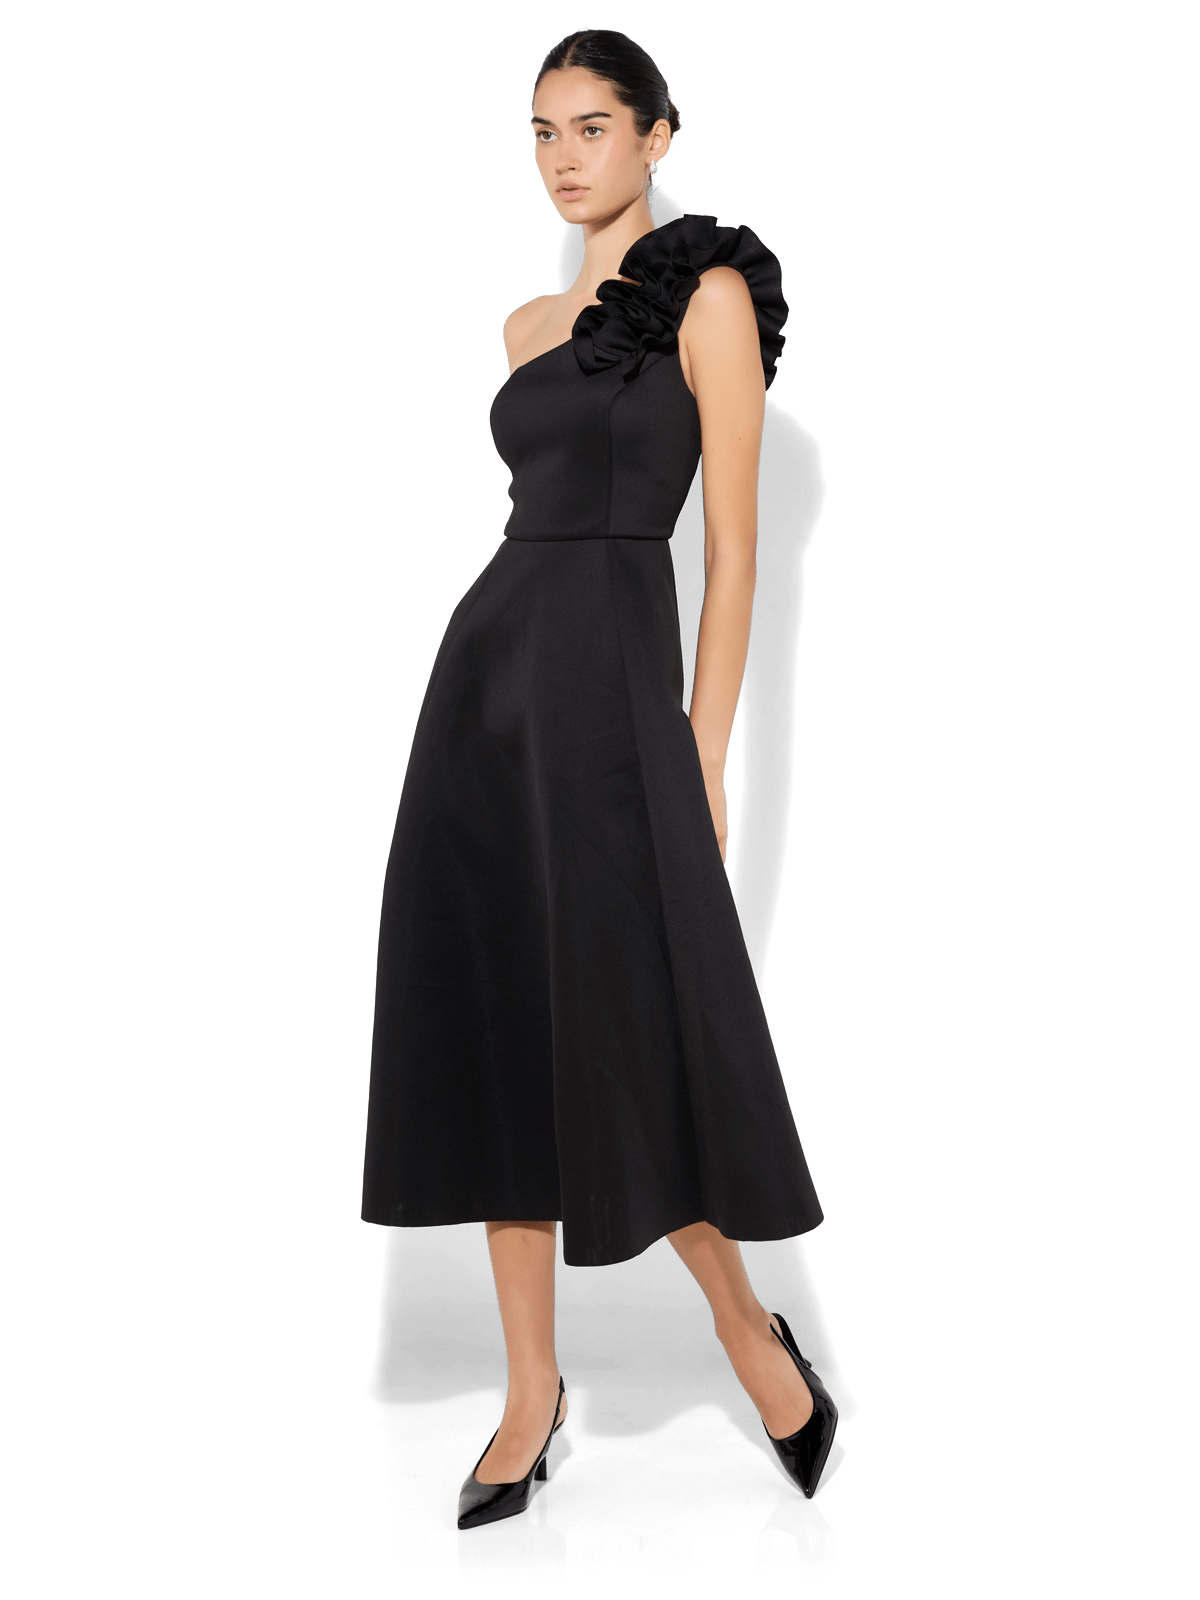 Skye Black Cocktail Dress by Montique